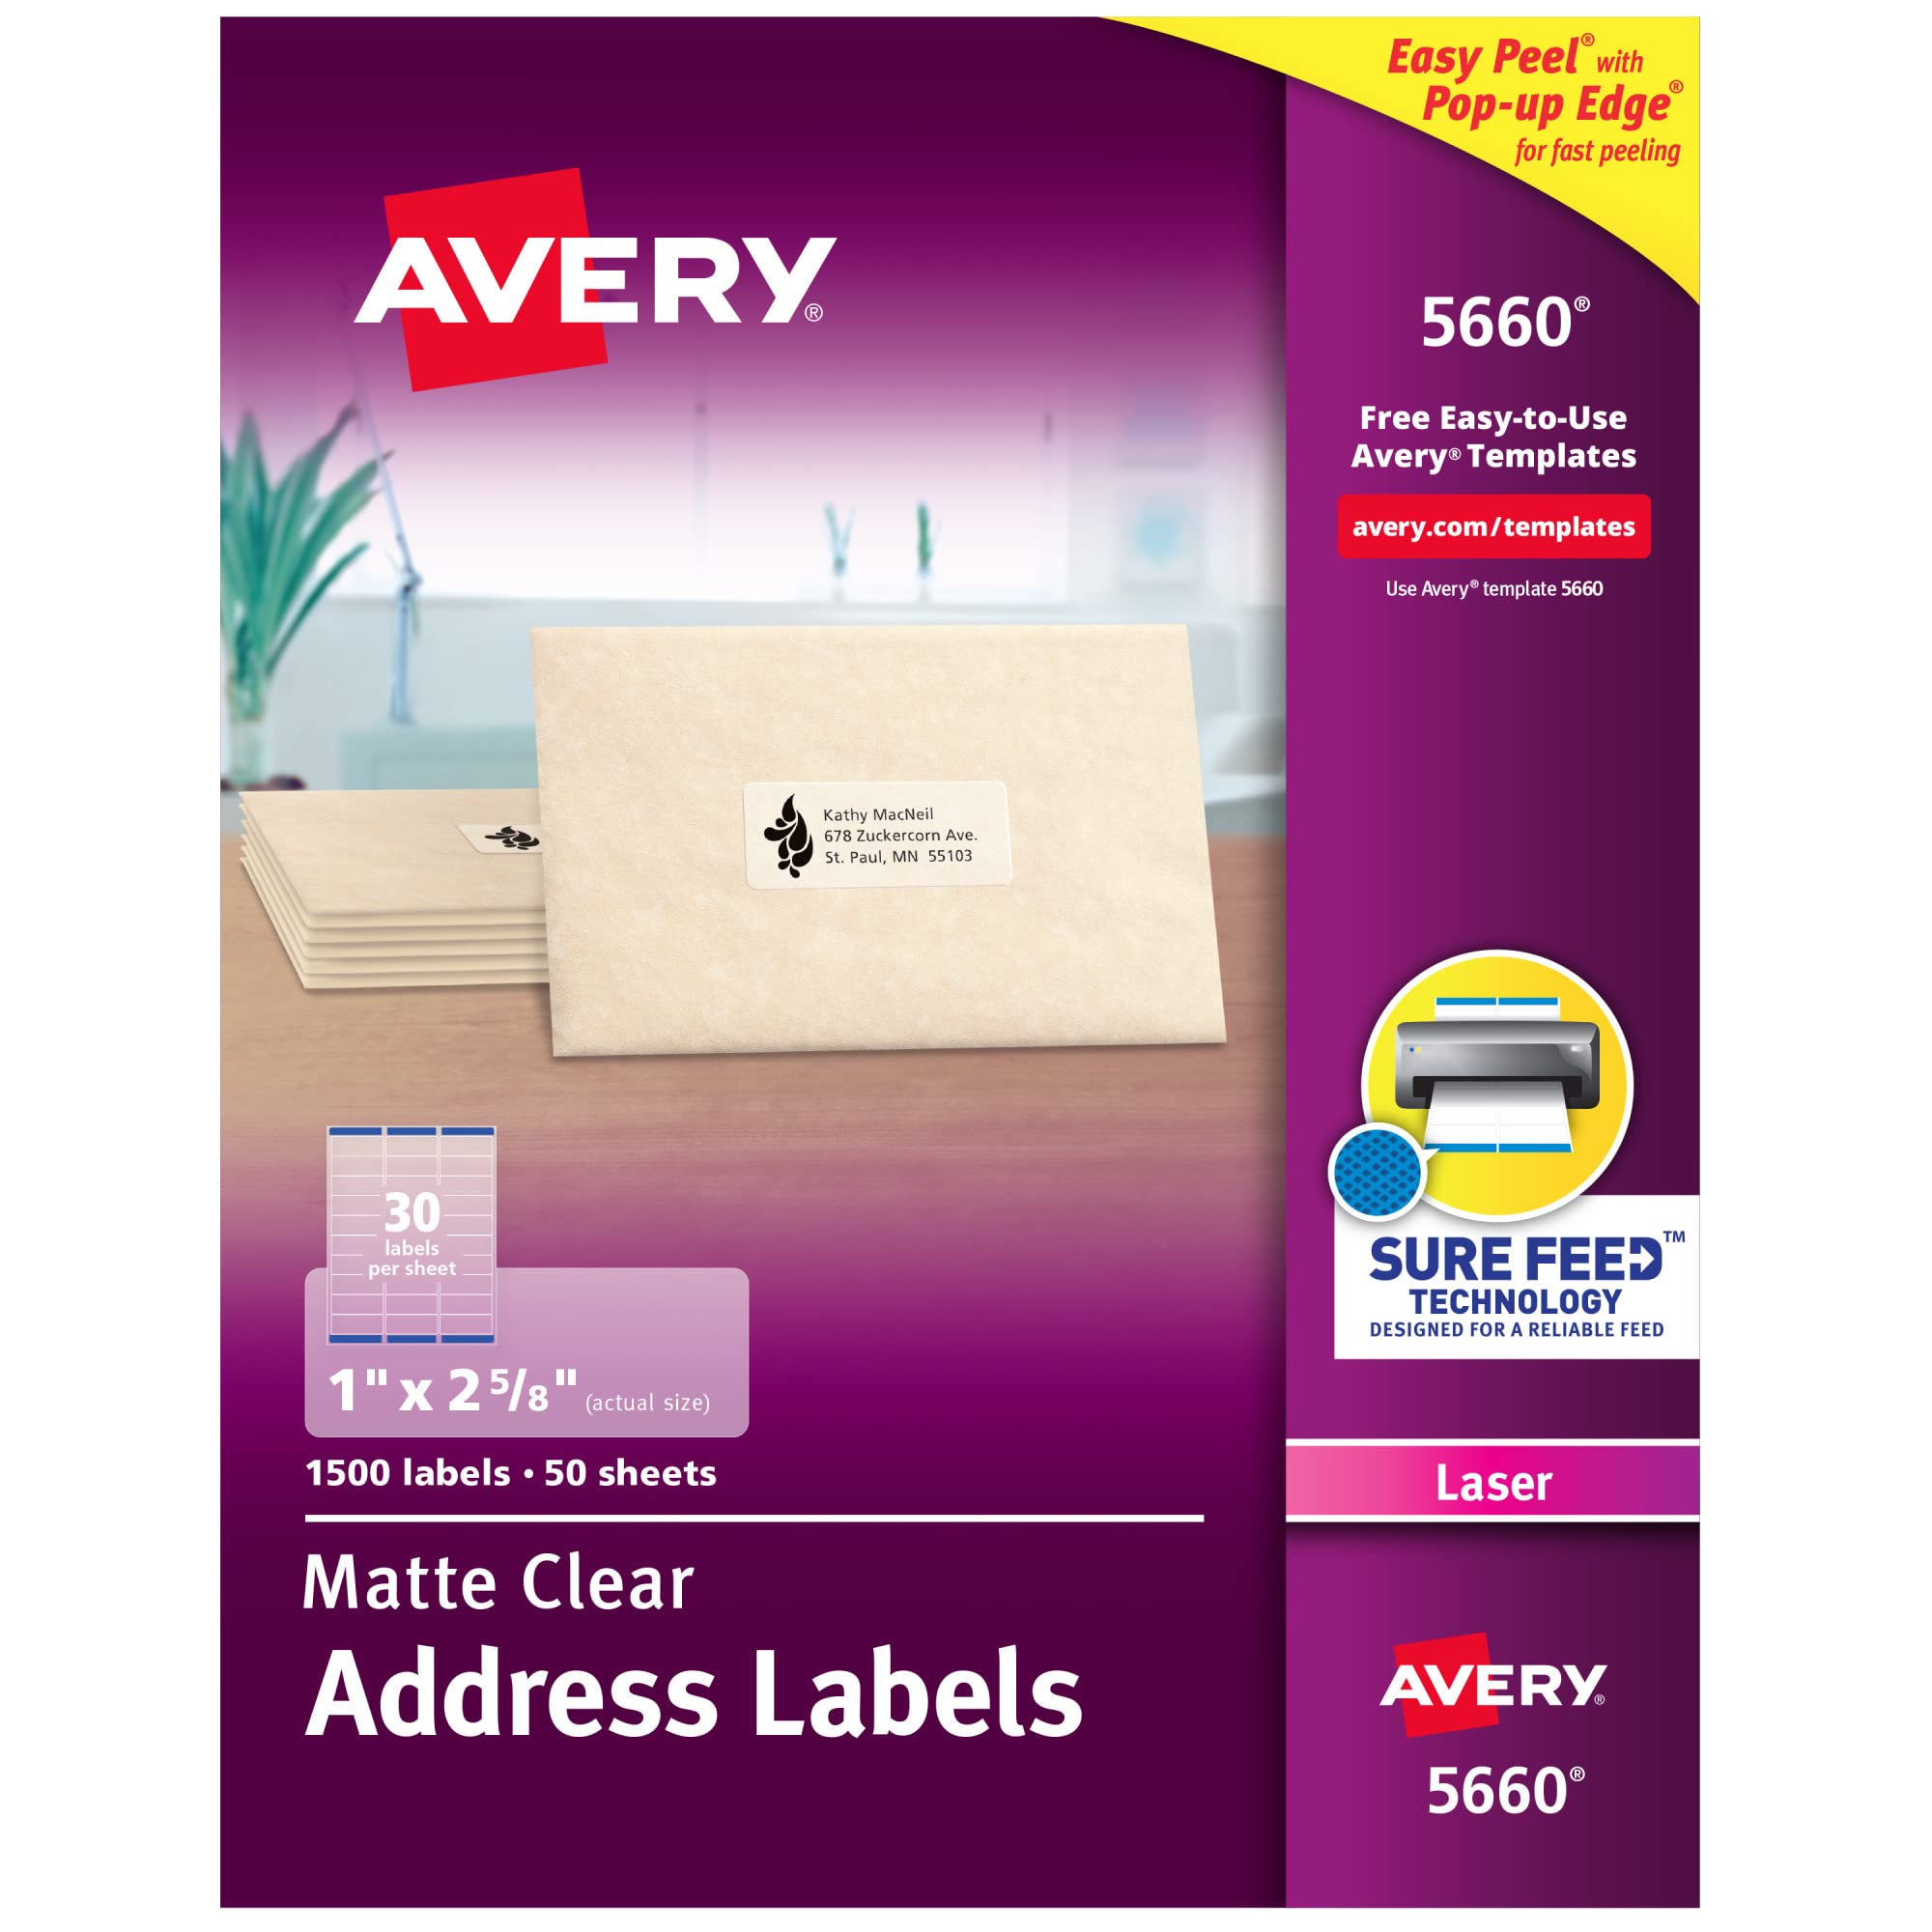 Avery Etiquetas de dirección transparentes fáciles de despegar para impresoras láser 1'' x 2-5/8''